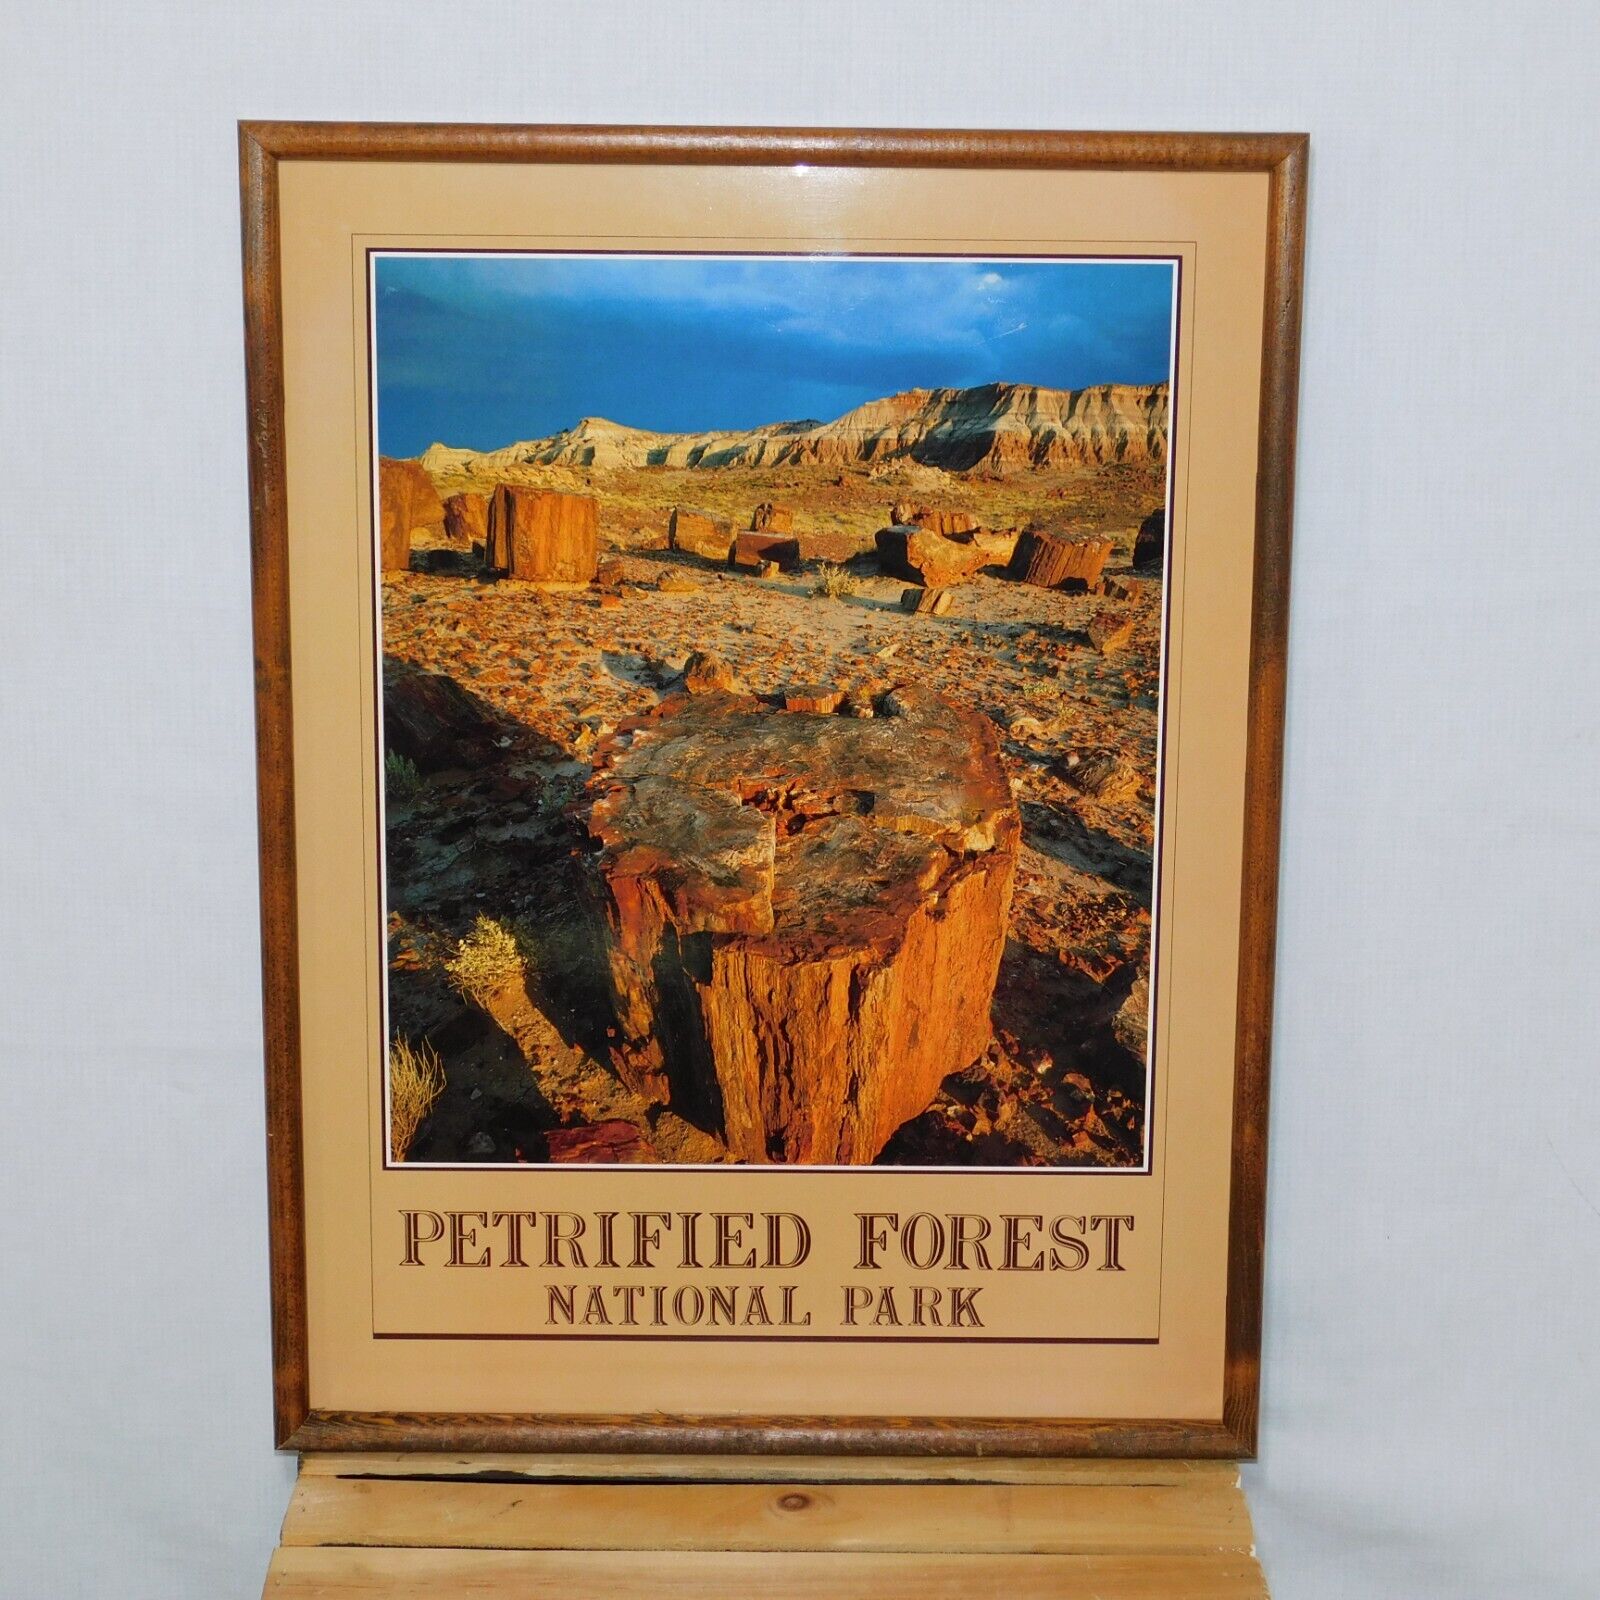 PETRIFIED FOREST NATIONAL PARK Photo Print Poster on Hardboard 25X19 Oak Framed